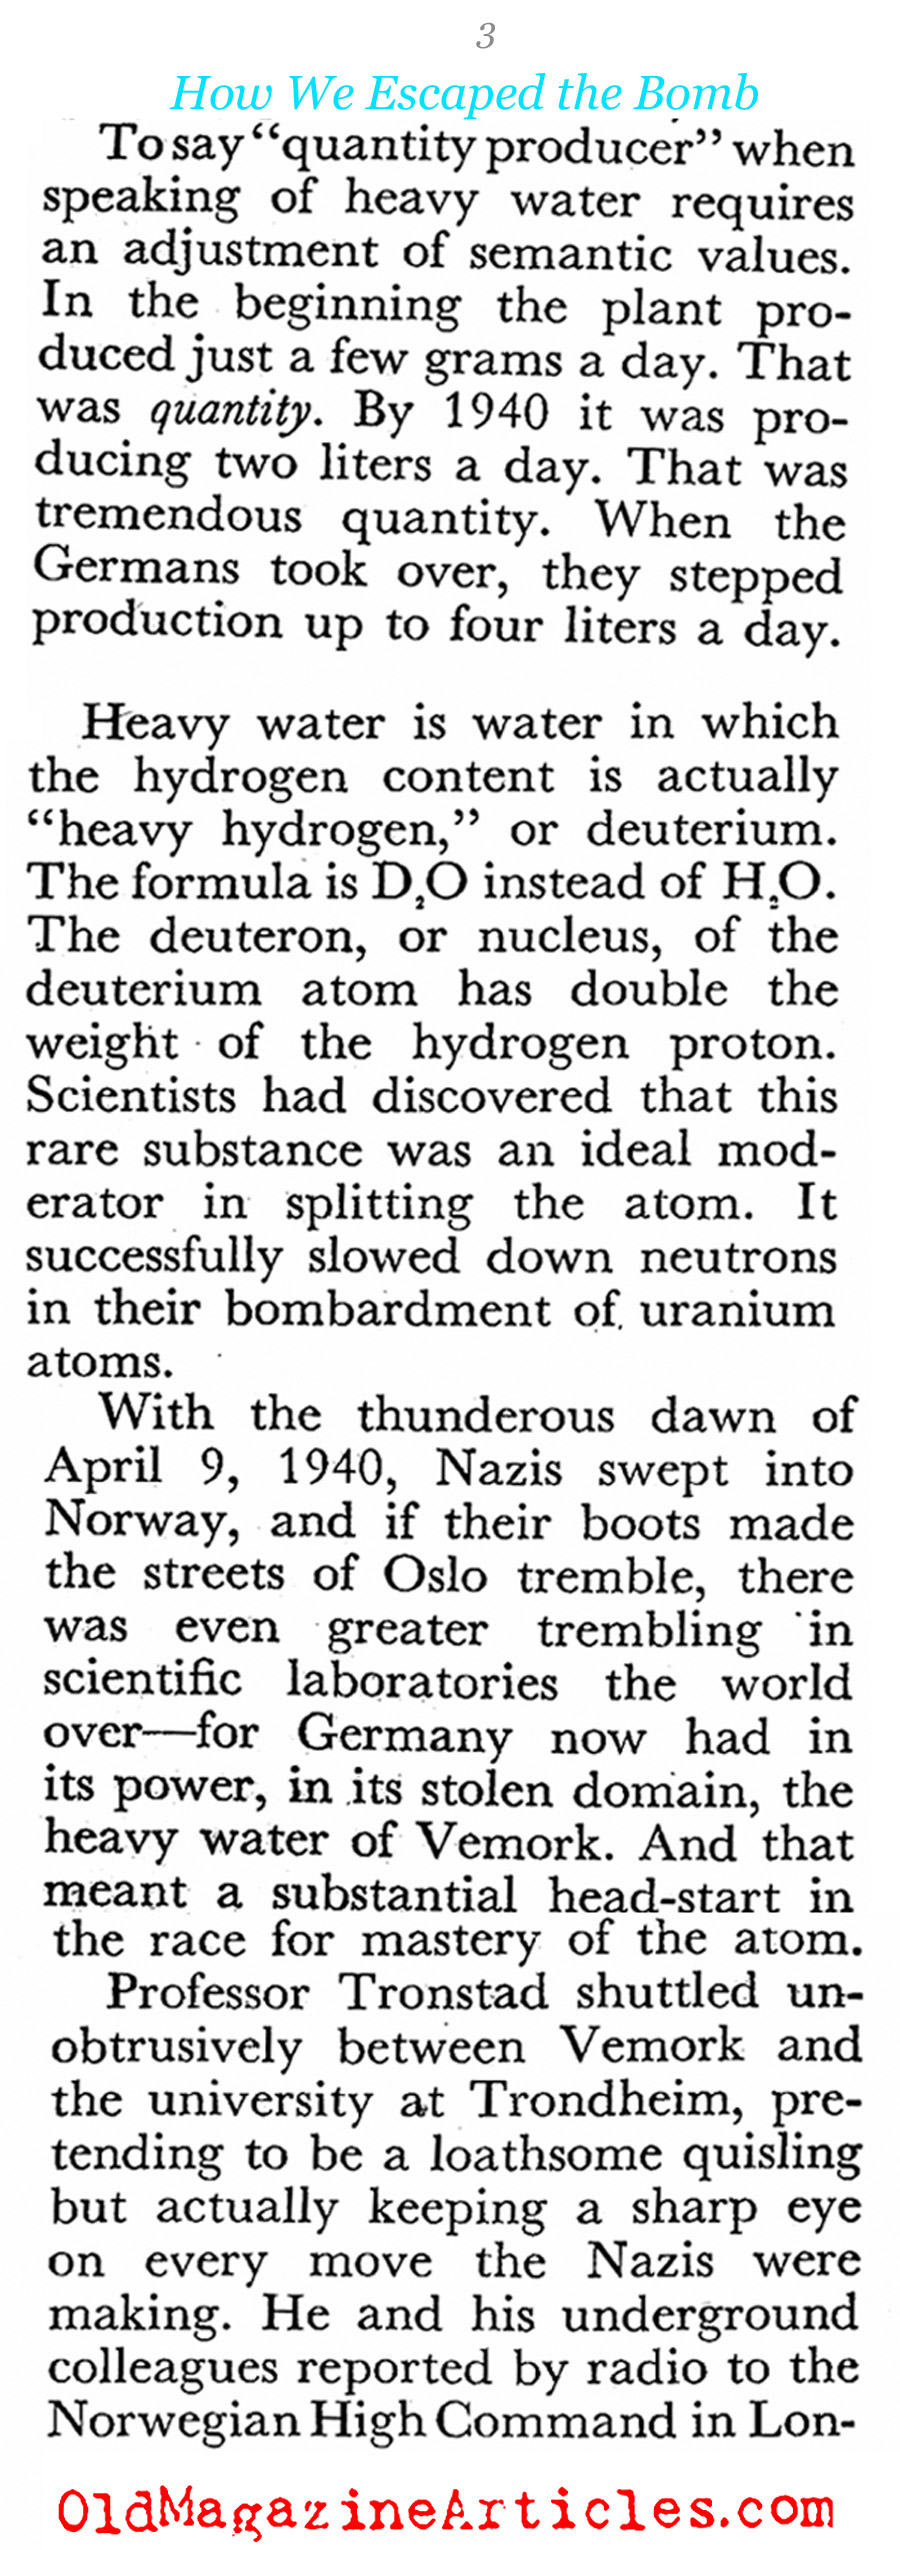 ''How We Escaped the Bomb'' (Coronet Magazine, 1945)